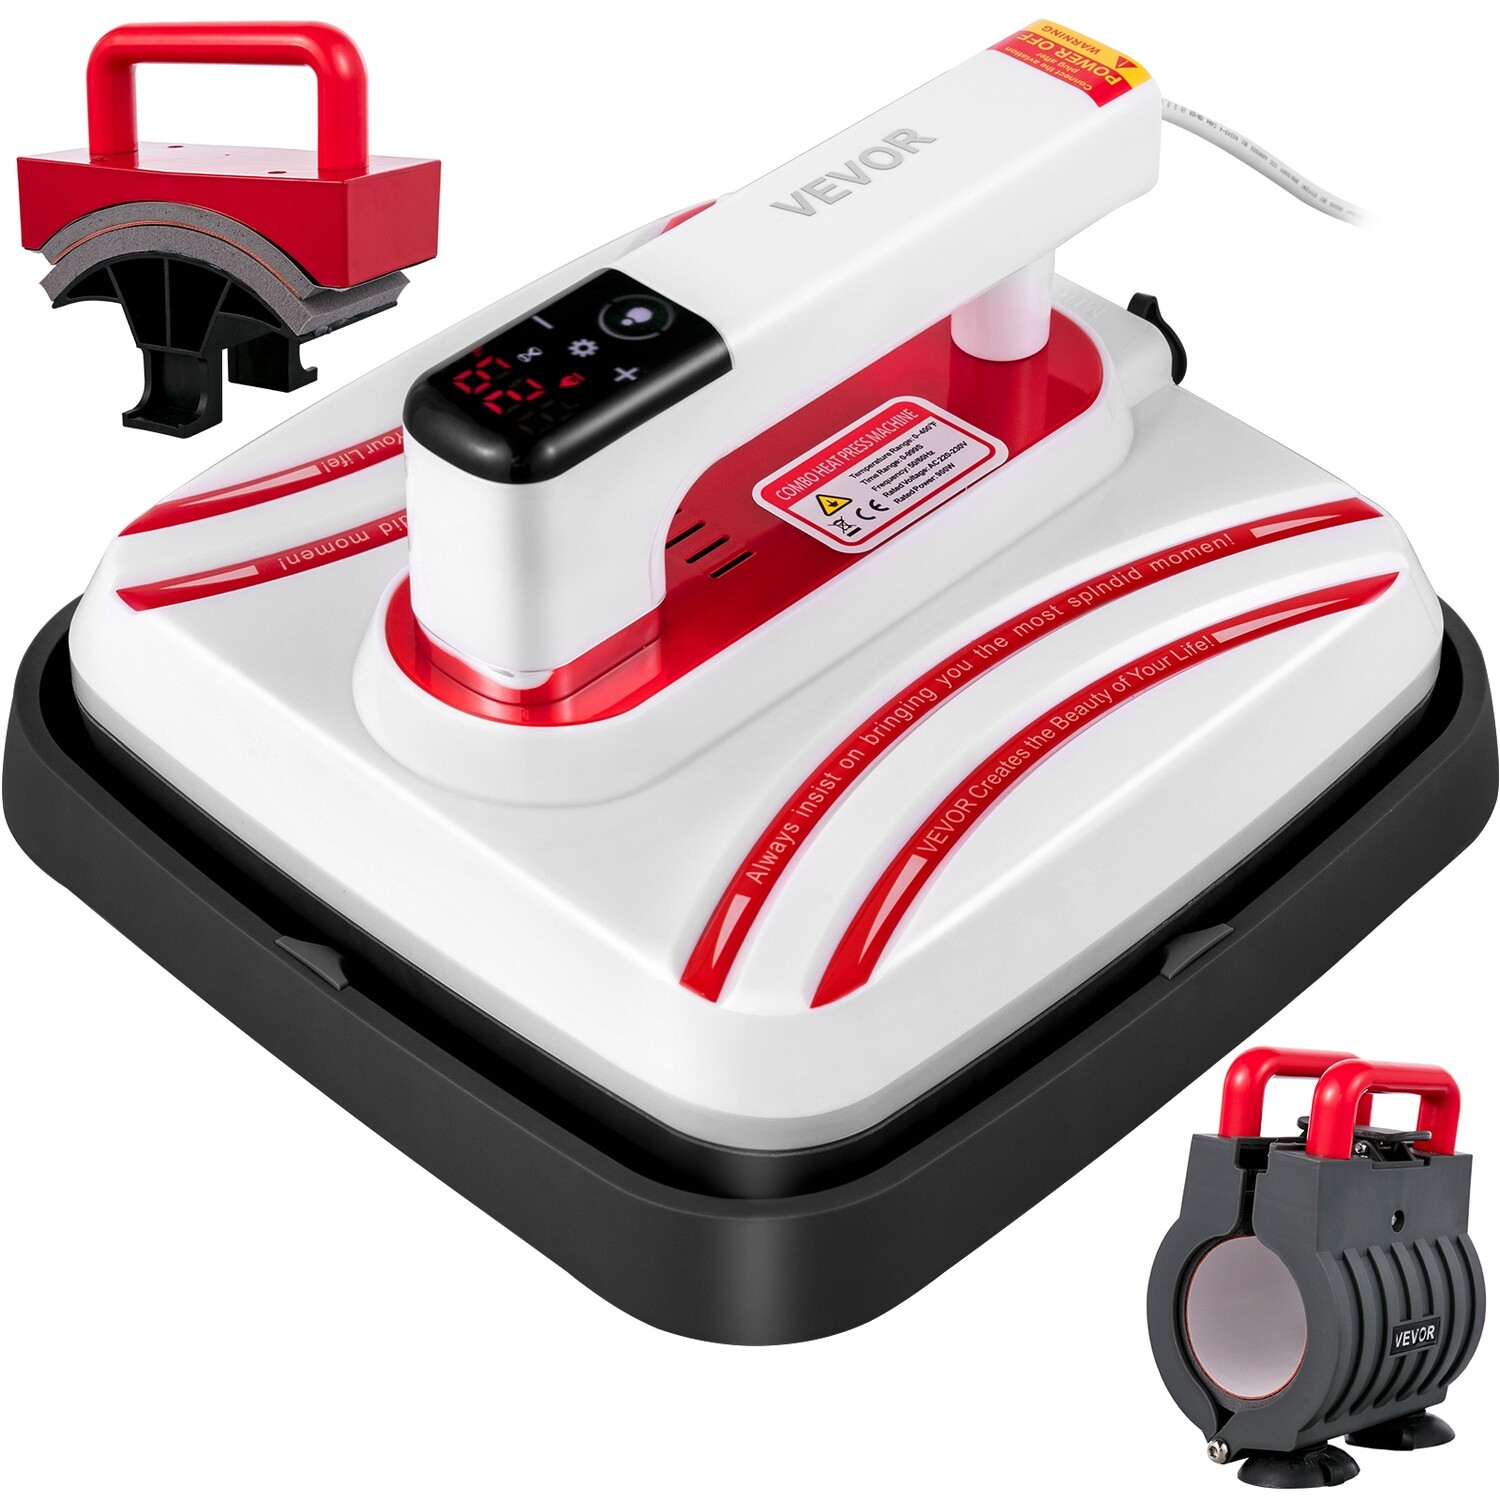 Red Portable 3 In 1 Heat Press Machine for Mug Cap, Heat Press Easy Press 10x10